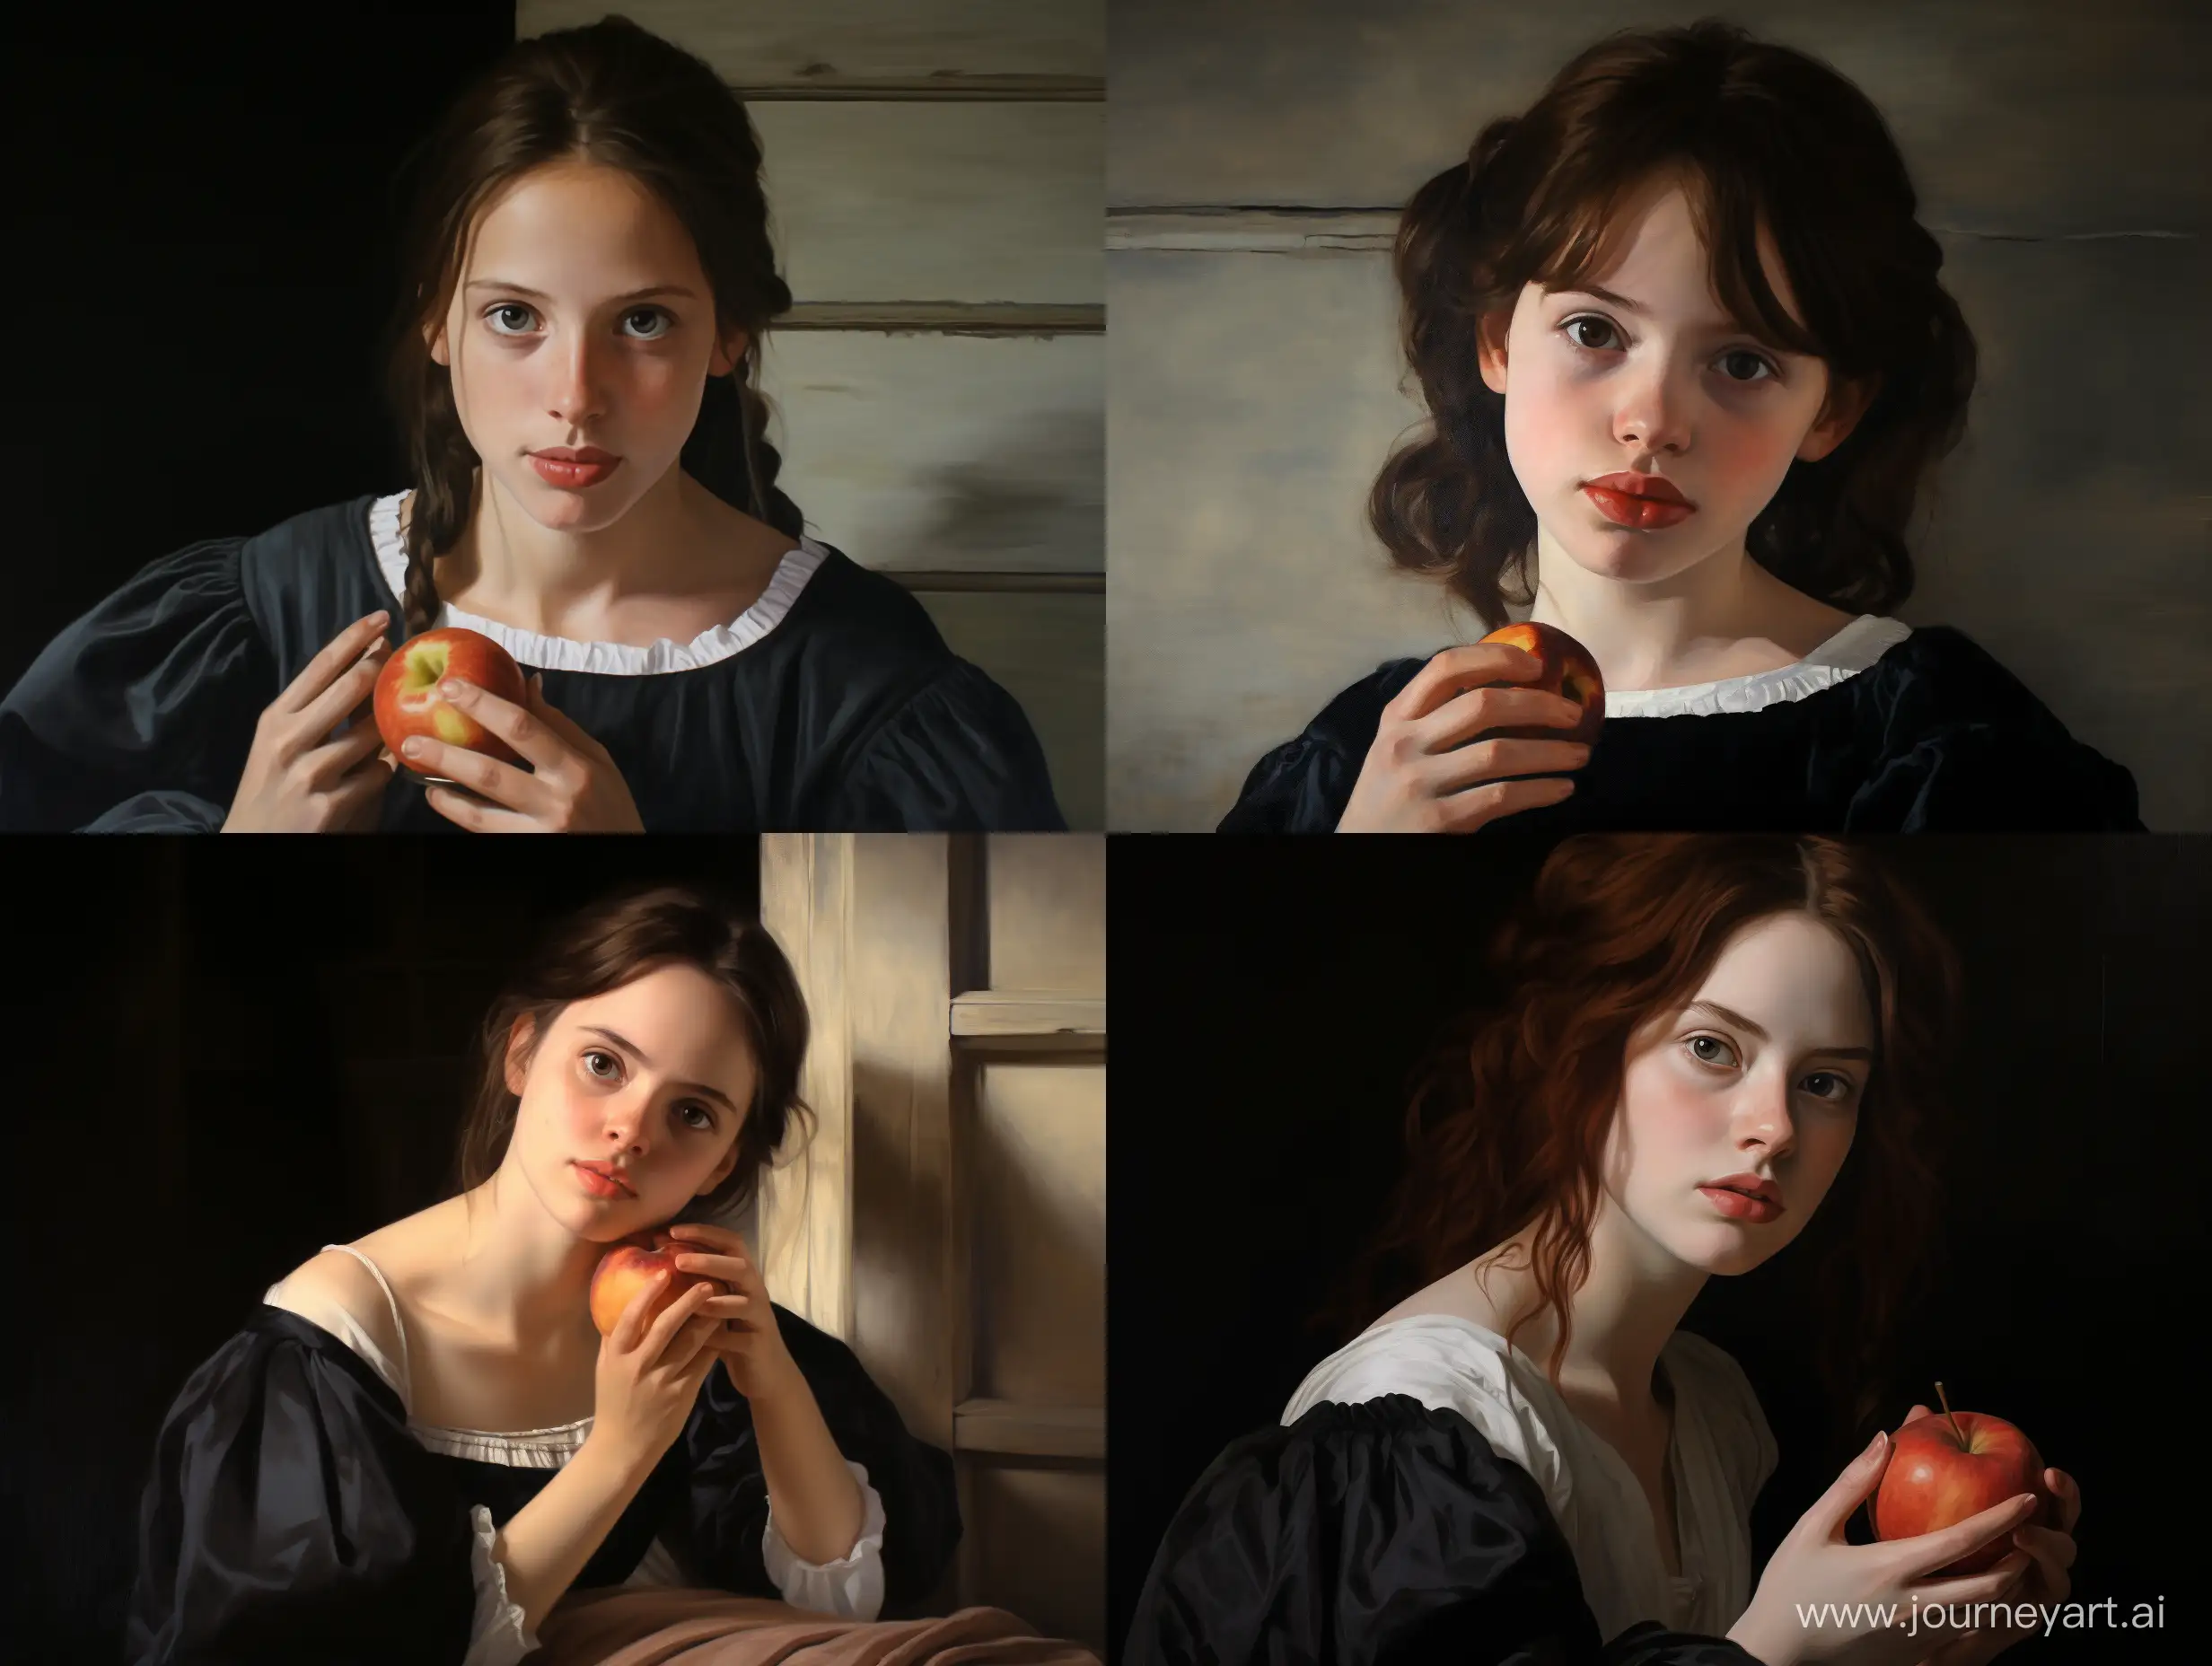 full size girl portrait eating apple in realistic style like  Velaskuez oil painting style